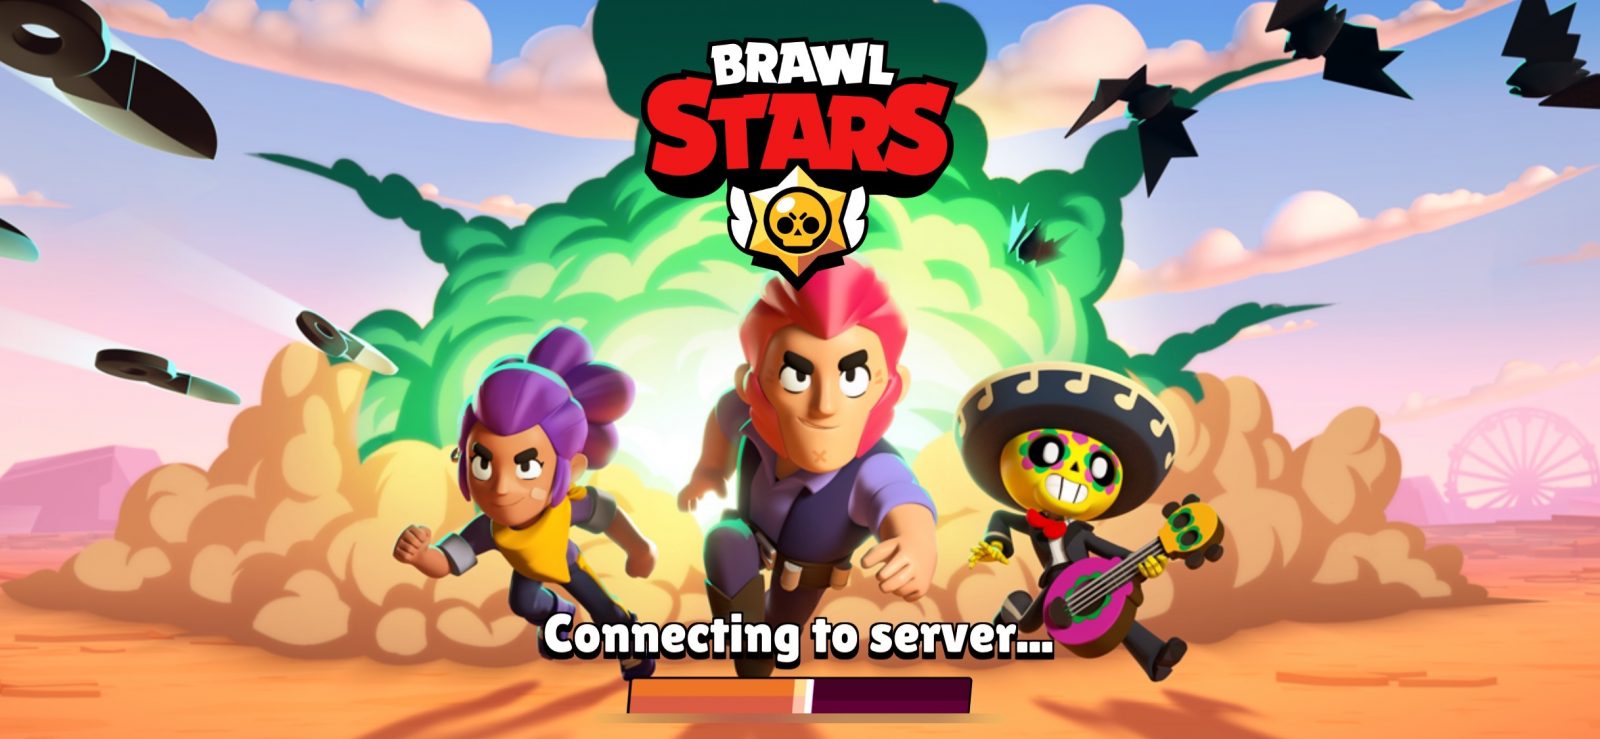 Brawl Stars The Casual App Gamer - brawl stars tap or joystick